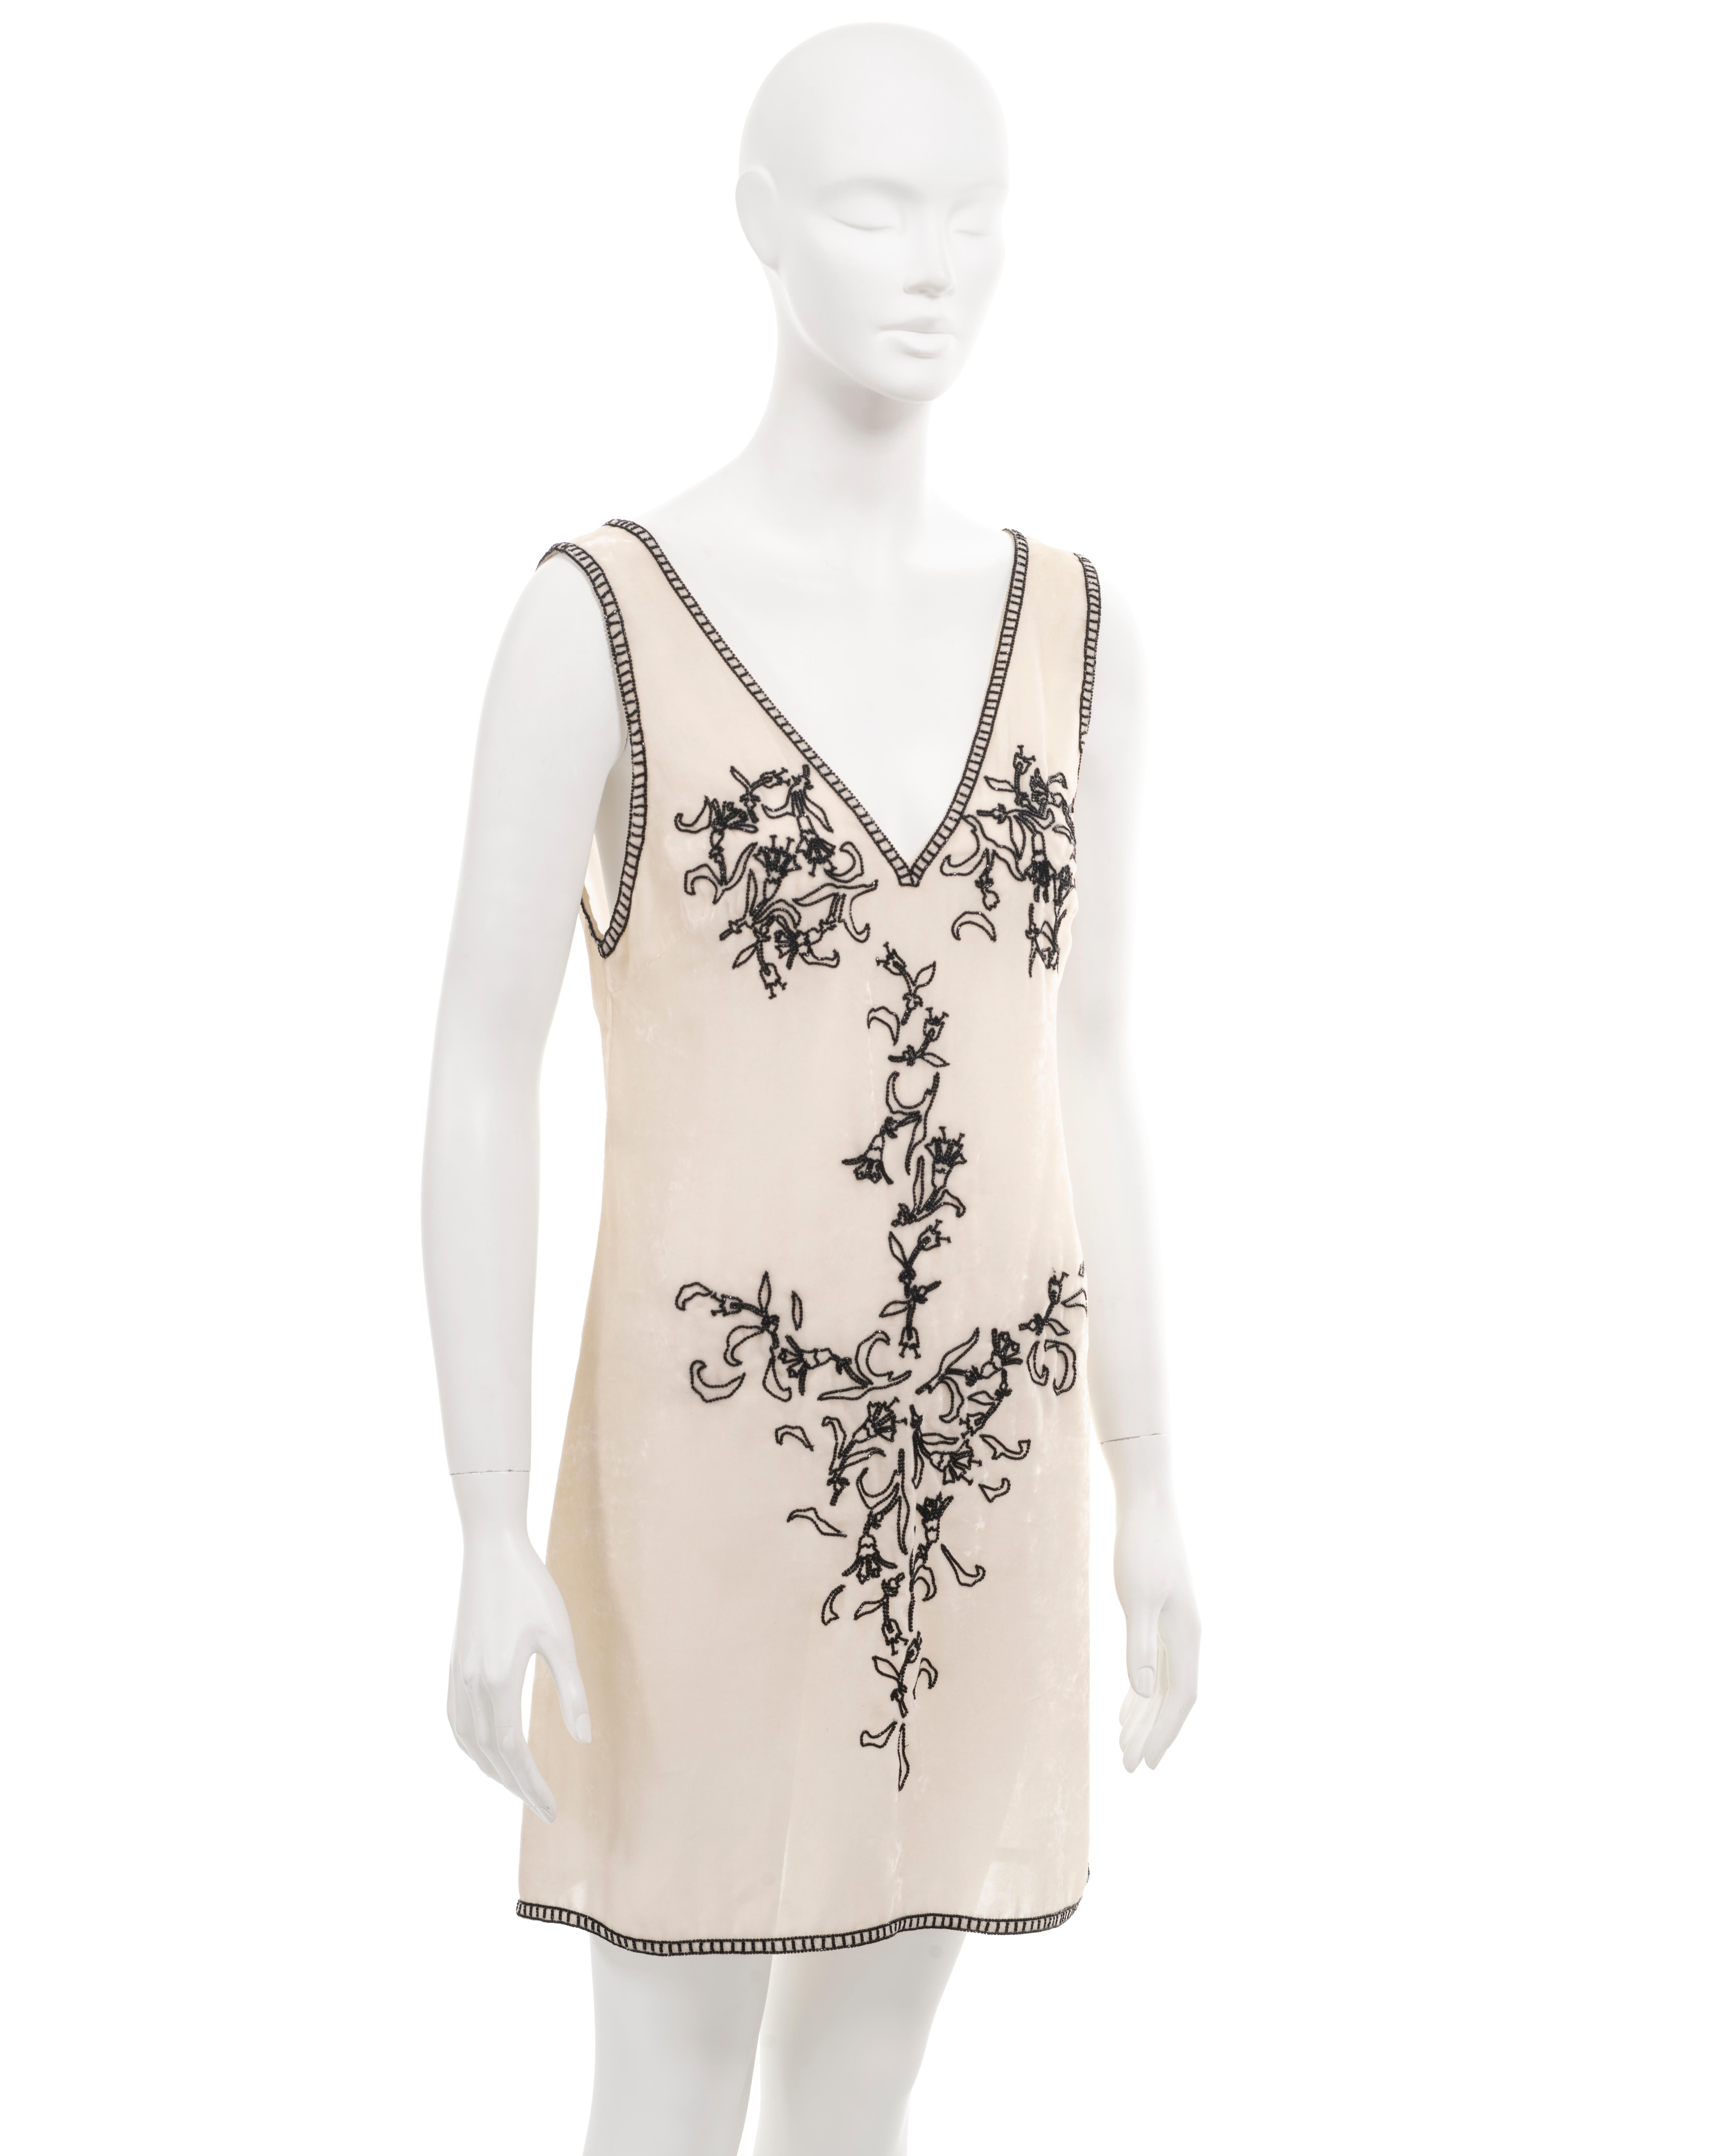 Prada by Miuccia Prada ivory velvet shift dress with beaded motif, fw 1997 For Sale 2